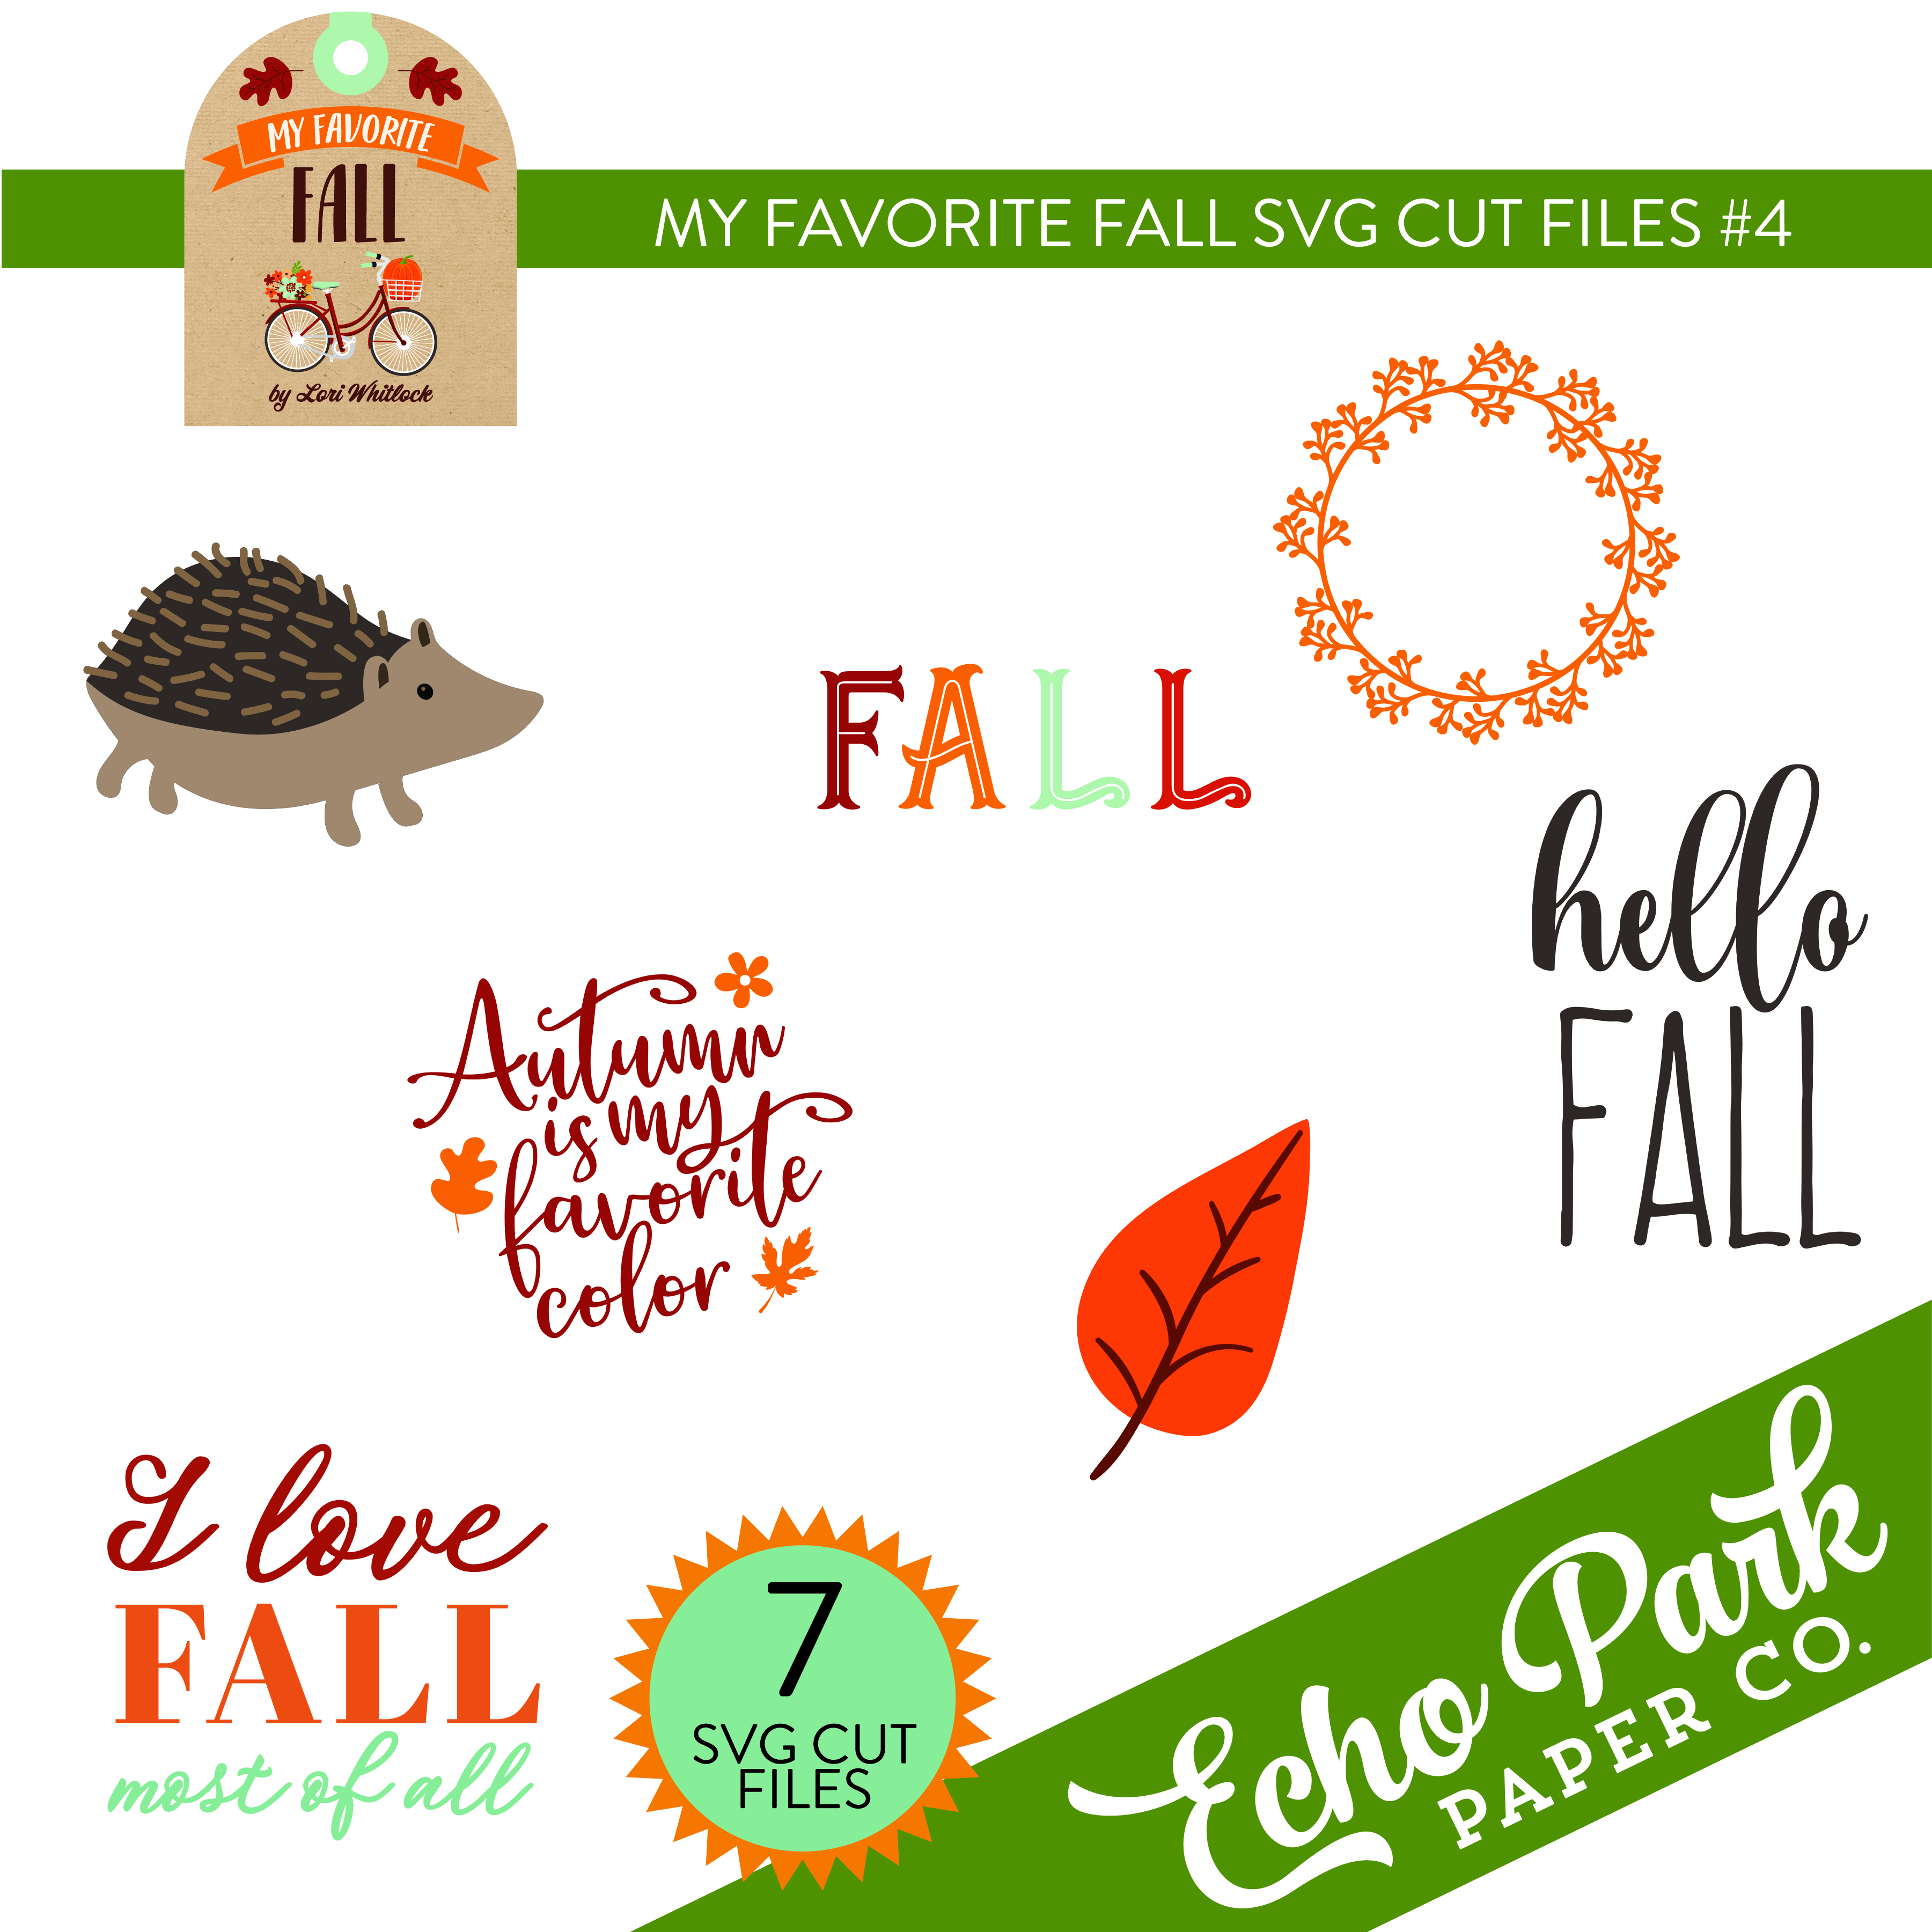 My Favorite Fall SVG Cut Files #4